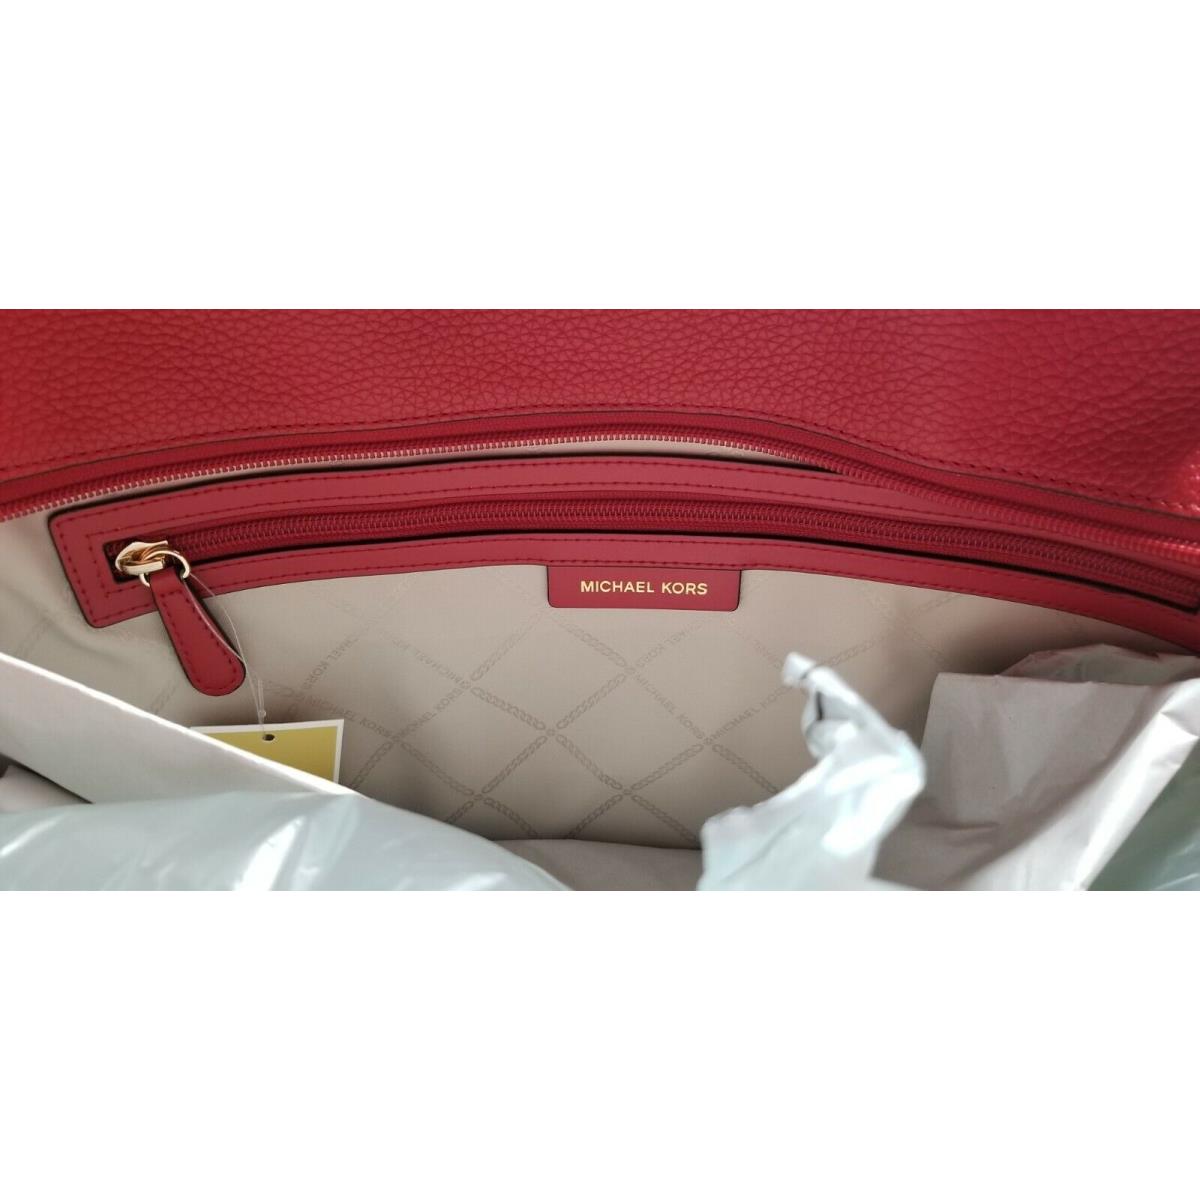 Michael Kors Beck Red Large Tote Bag Weekender Handbag Pebbled Leather